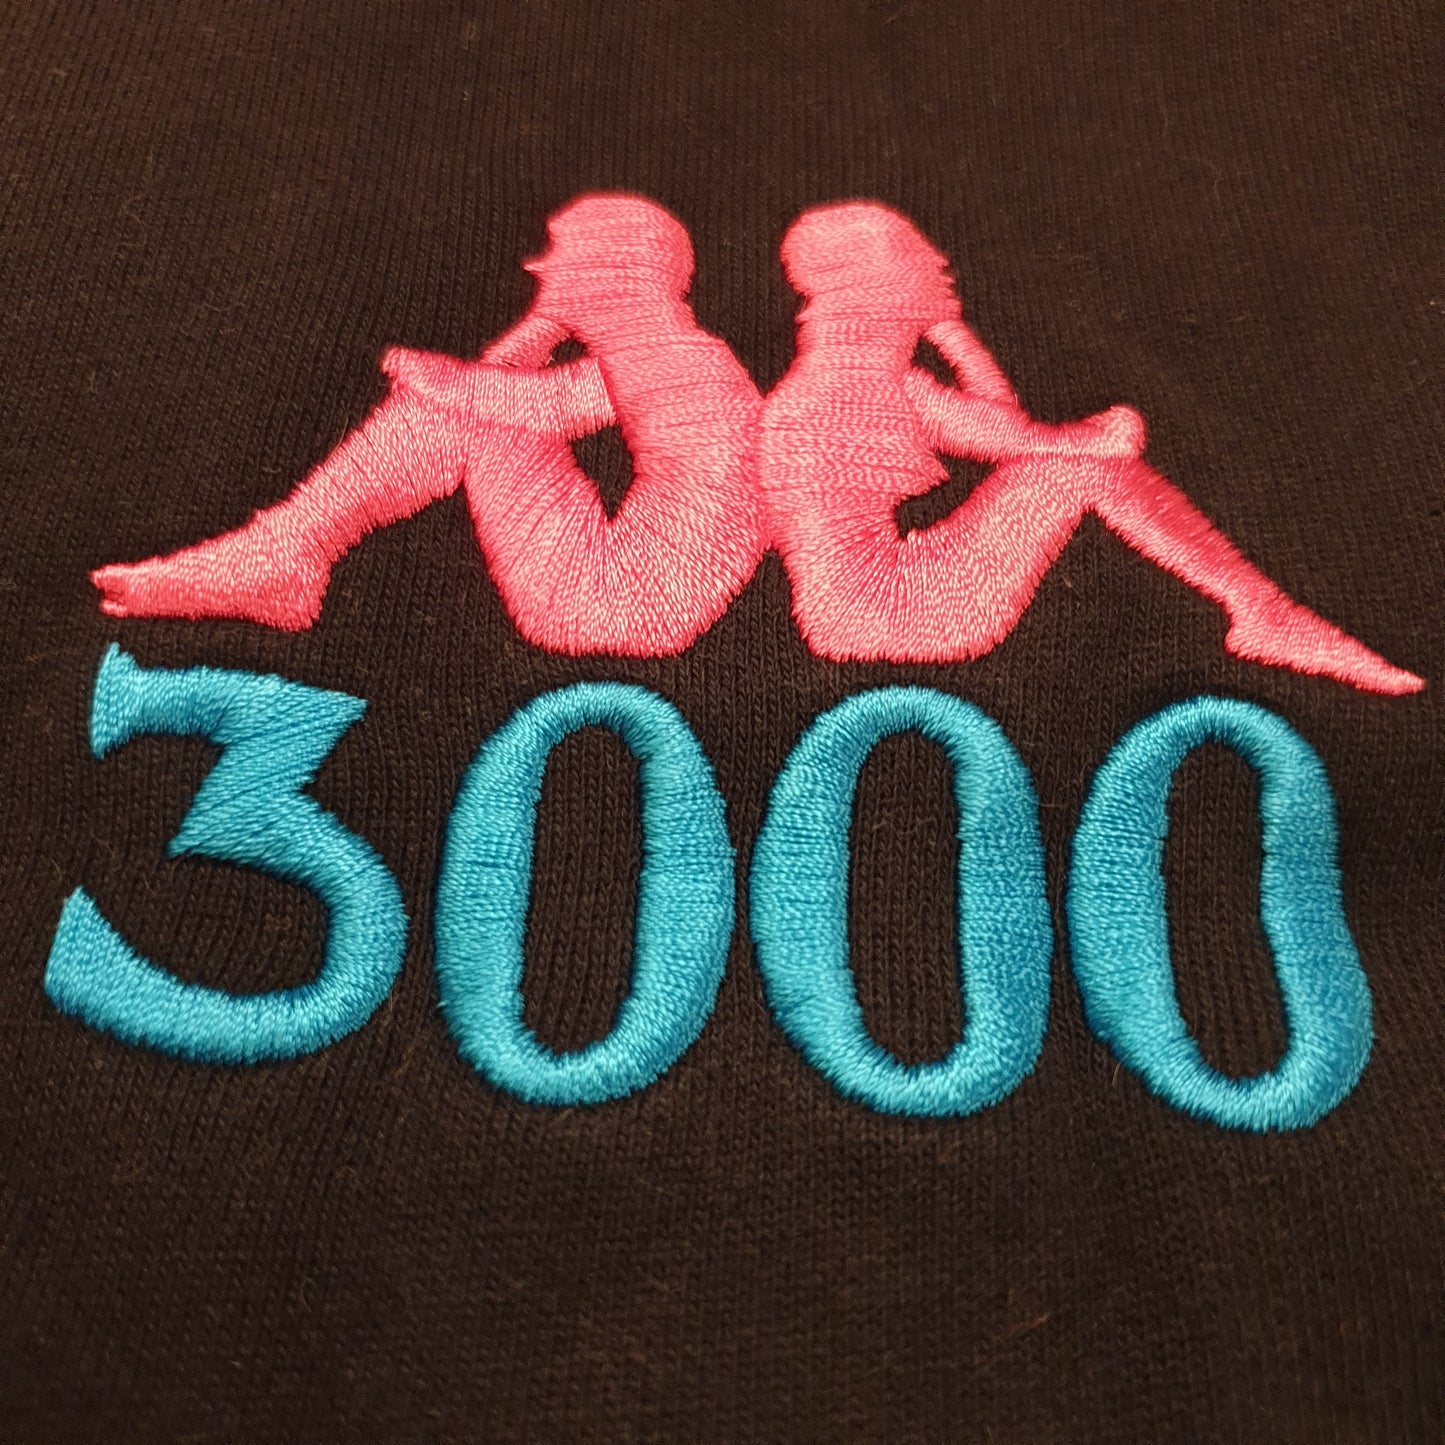 Gumball 3000 Kappa Sweatshirt M